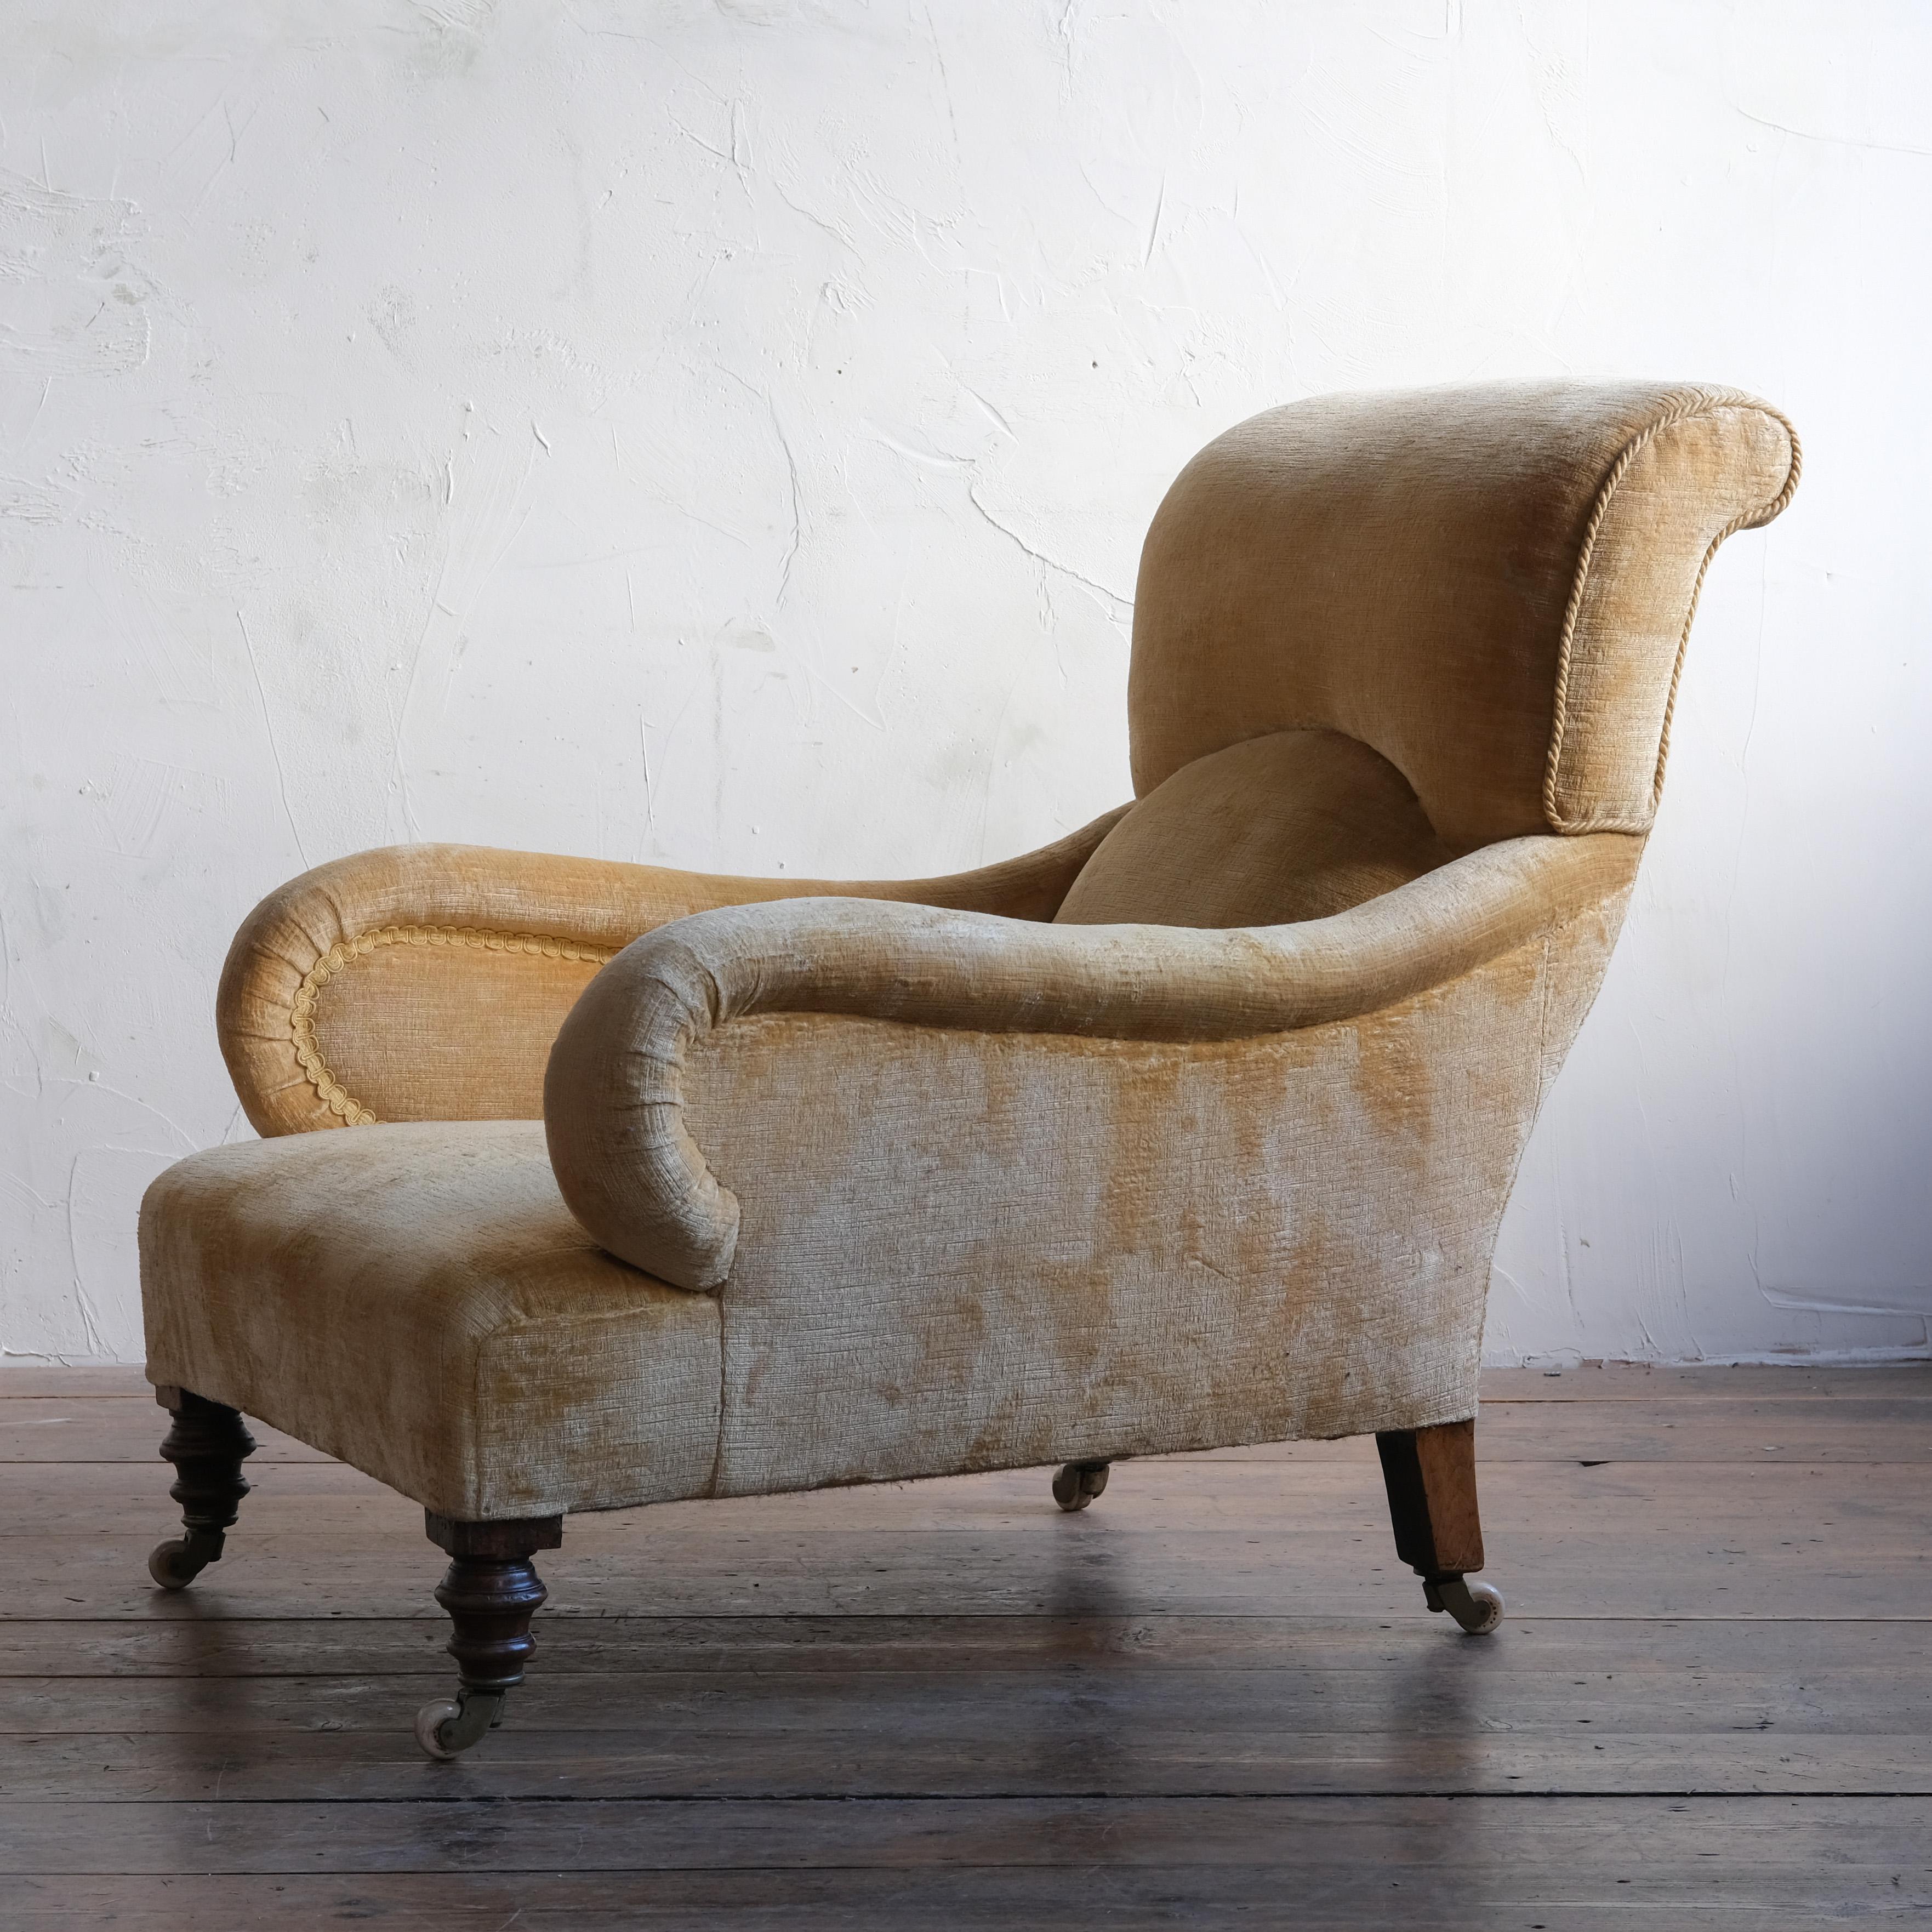 British 19th Century Howard Style Deep Seated Armchair